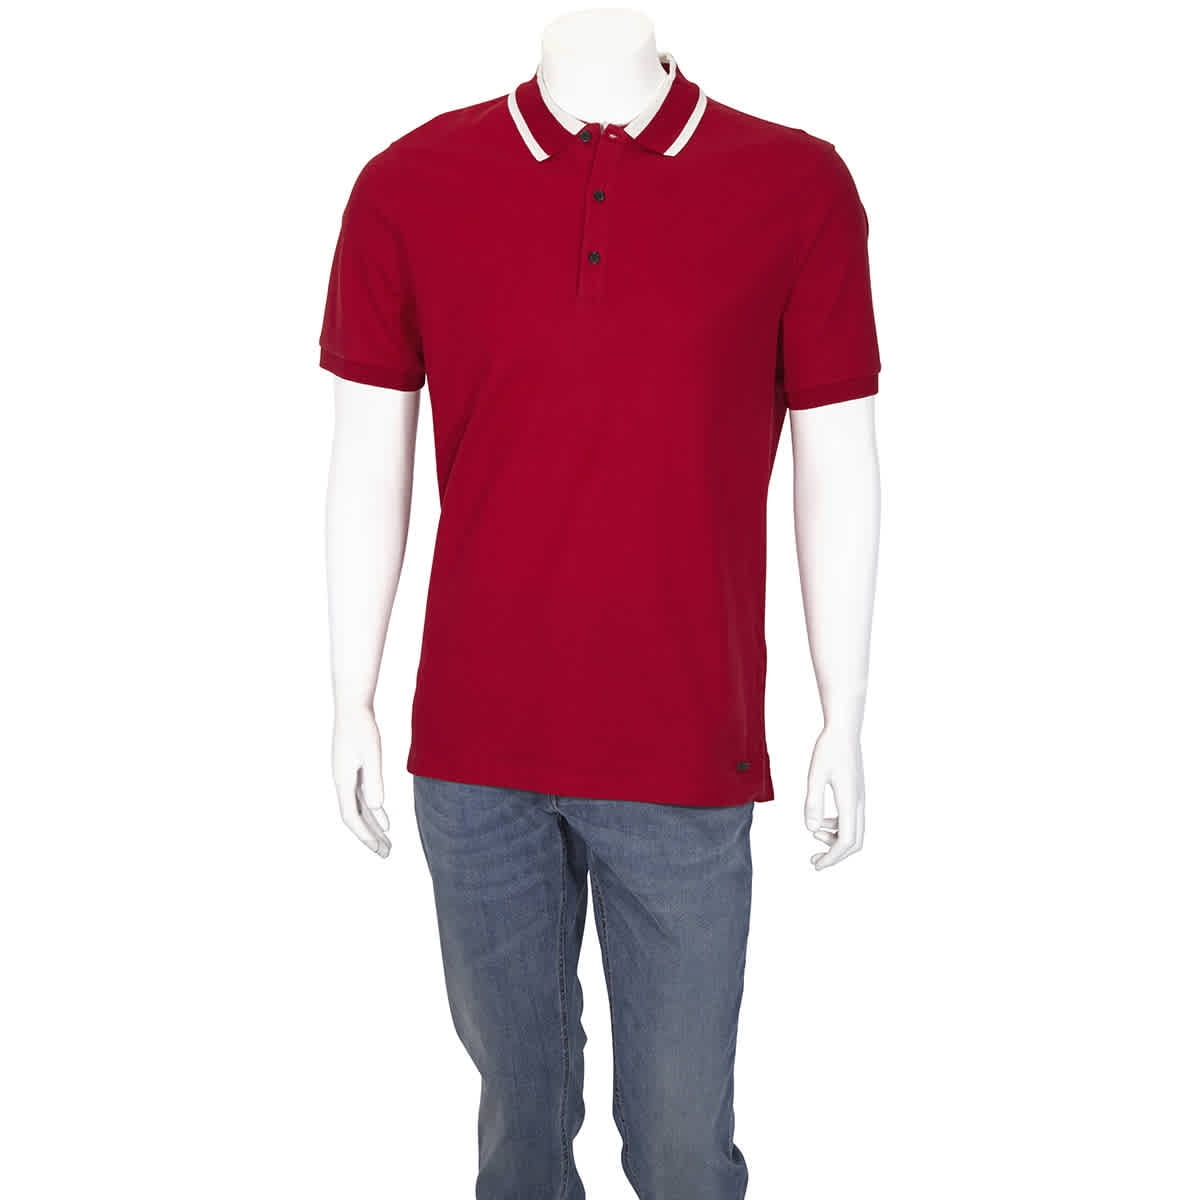 religie ophouden Catastrofe Burberry Marton Uniform Red Striped Collar Cotton Pique Polo Shirt, Brand  Size XX-Large - Walmart.com